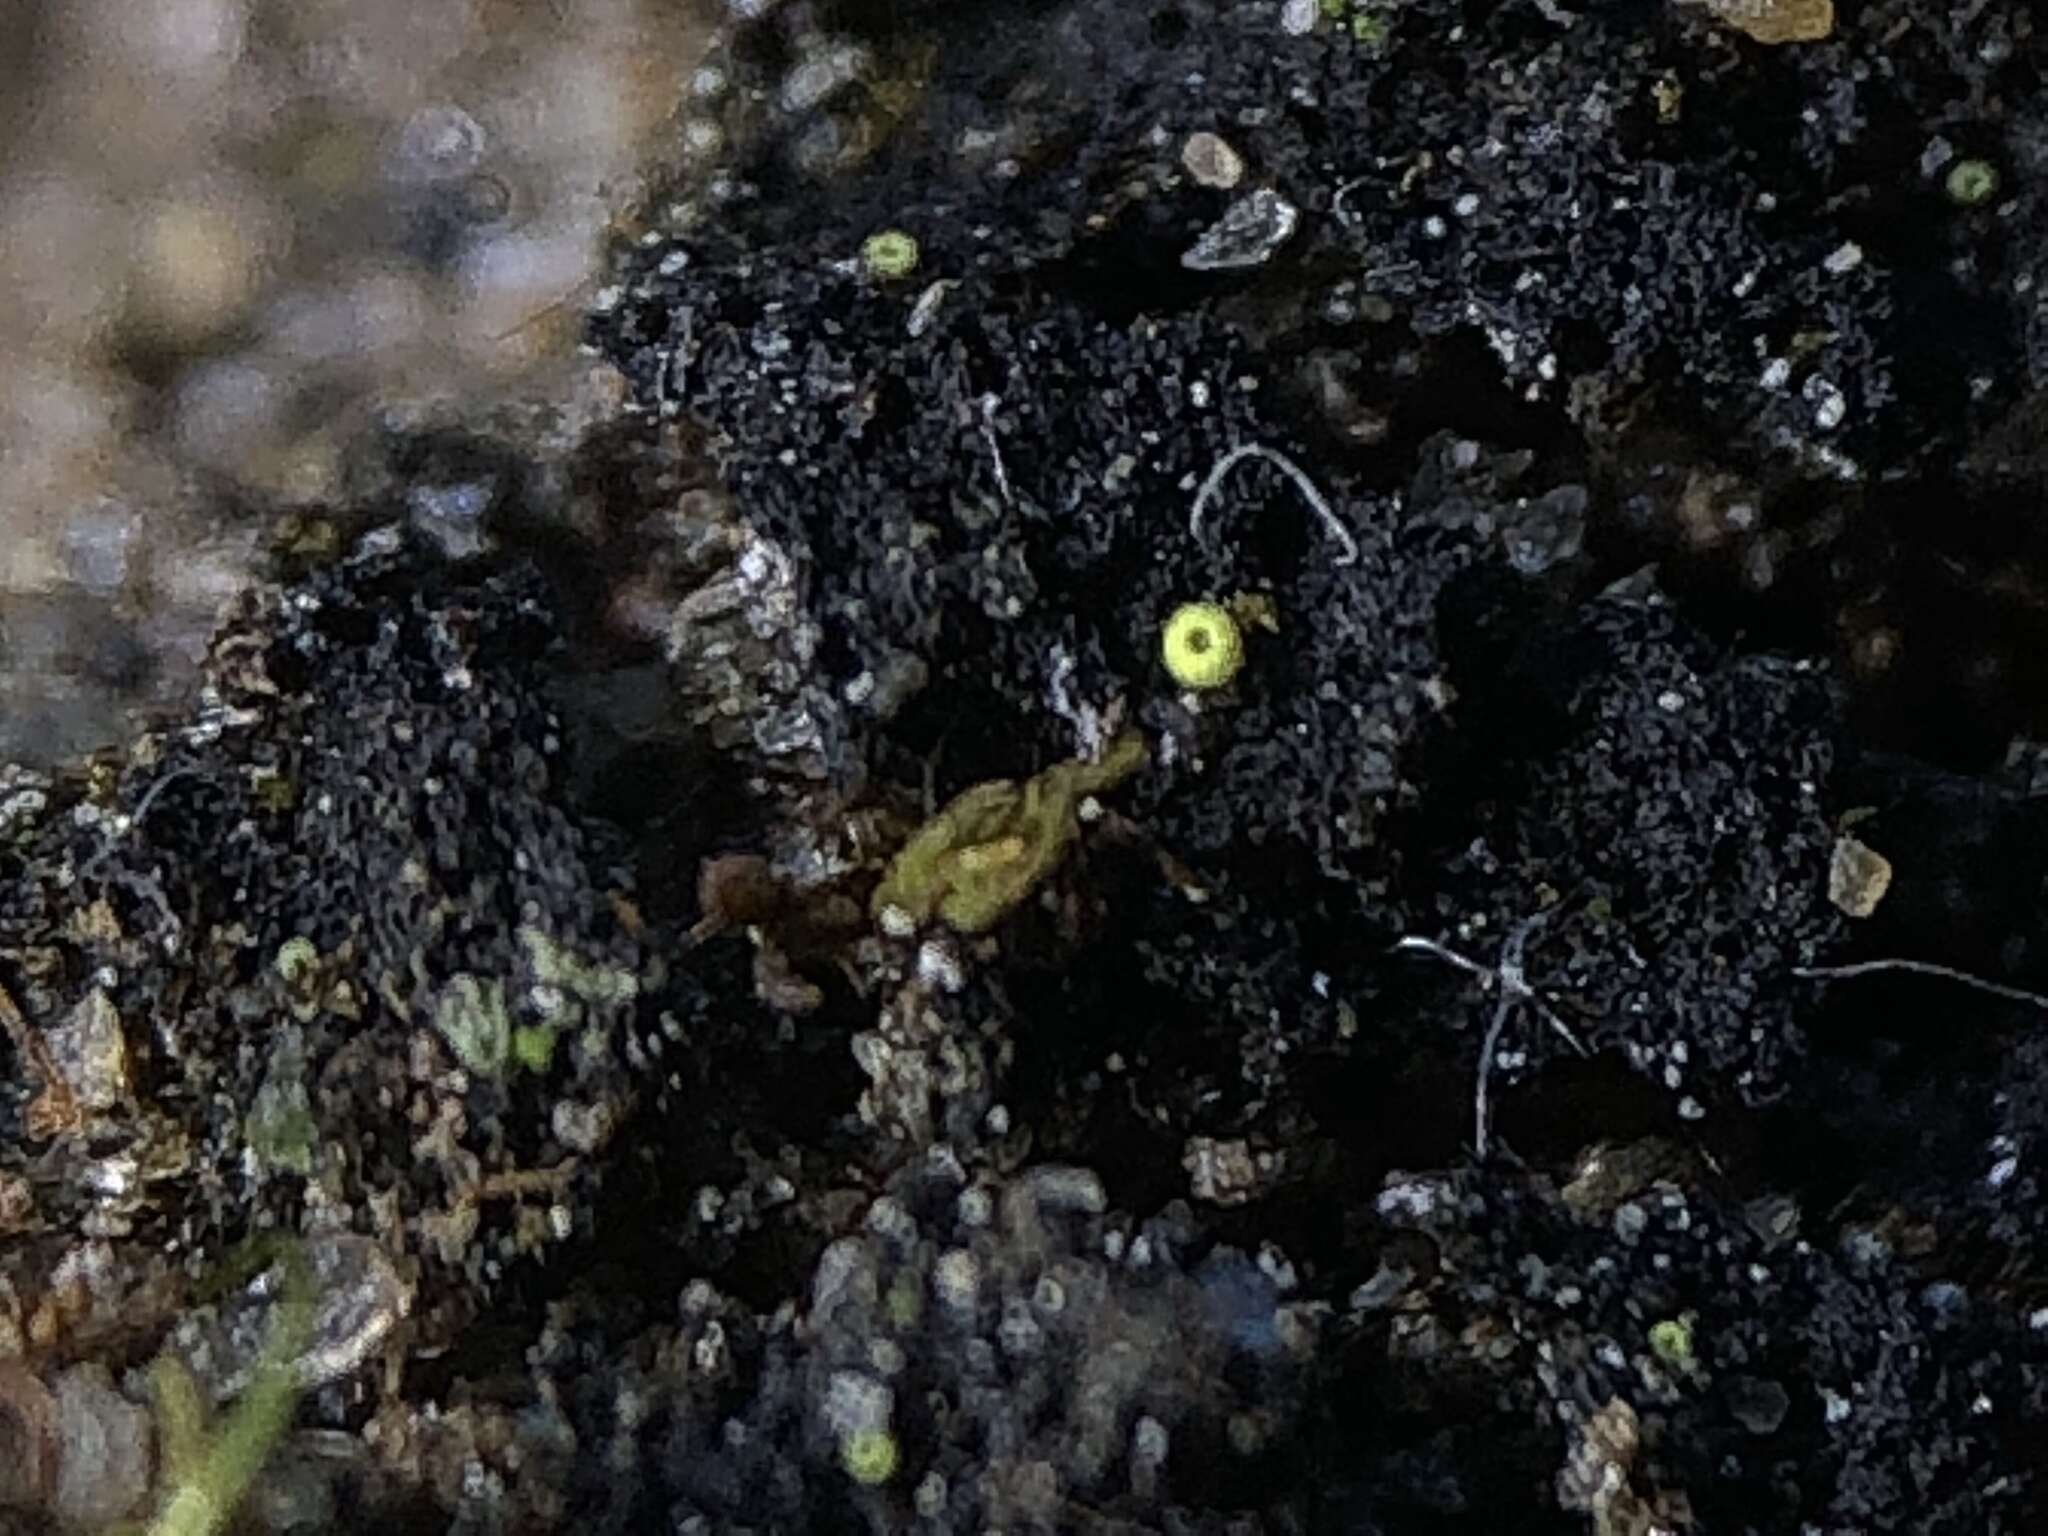 Image of thelocarpon lichen